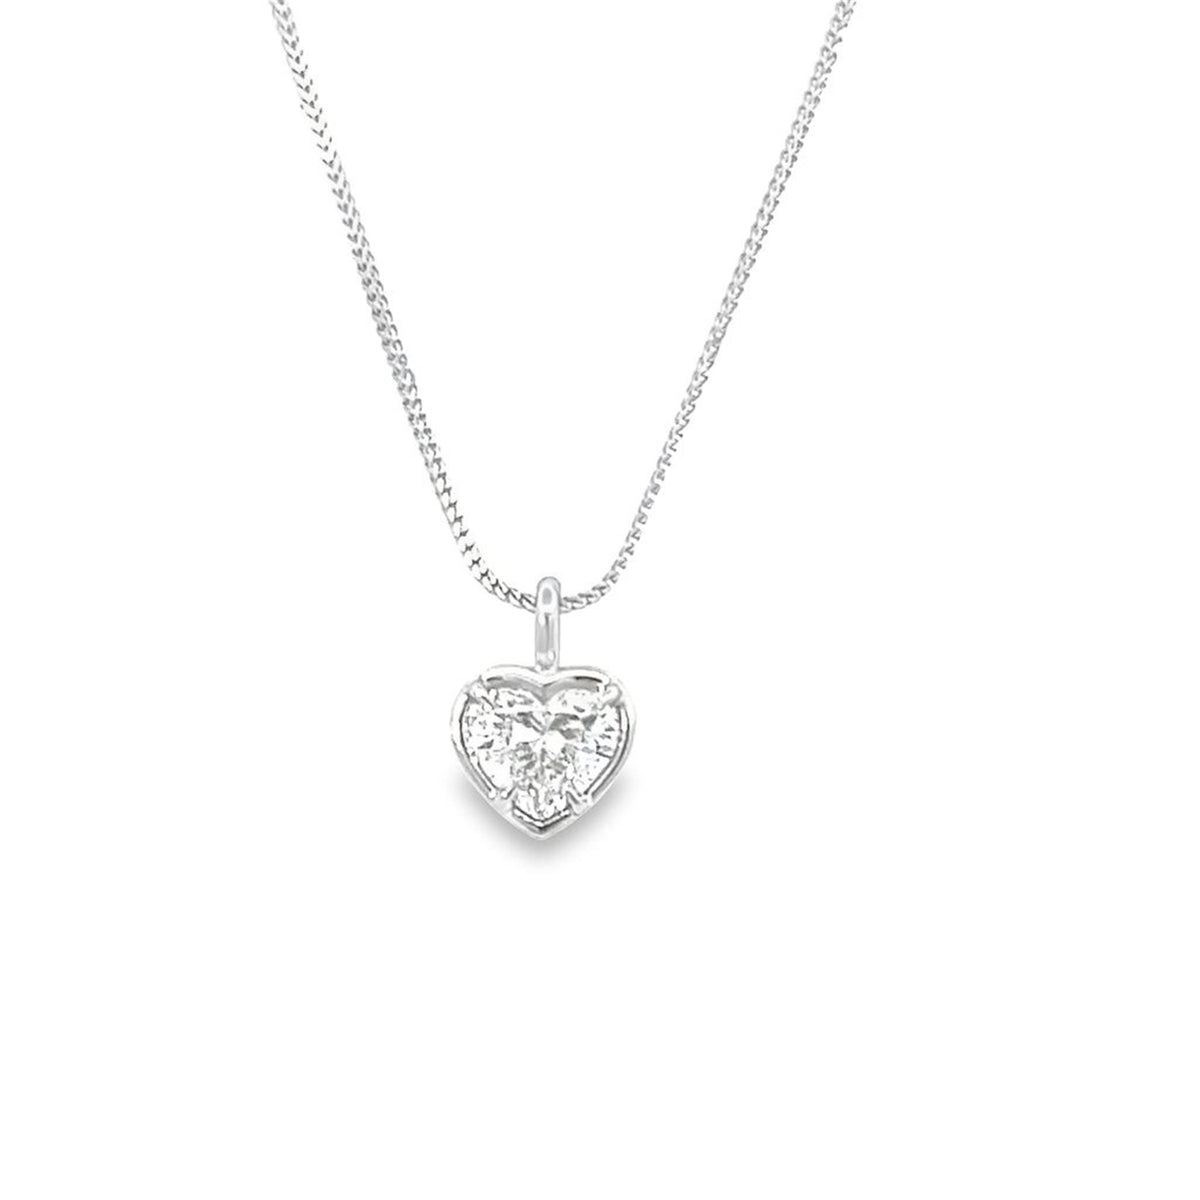 18Kt White Gold Faux Bezel Set Solitaire Pendant With 1.52cttw Natural Heart-Shaped Diamond